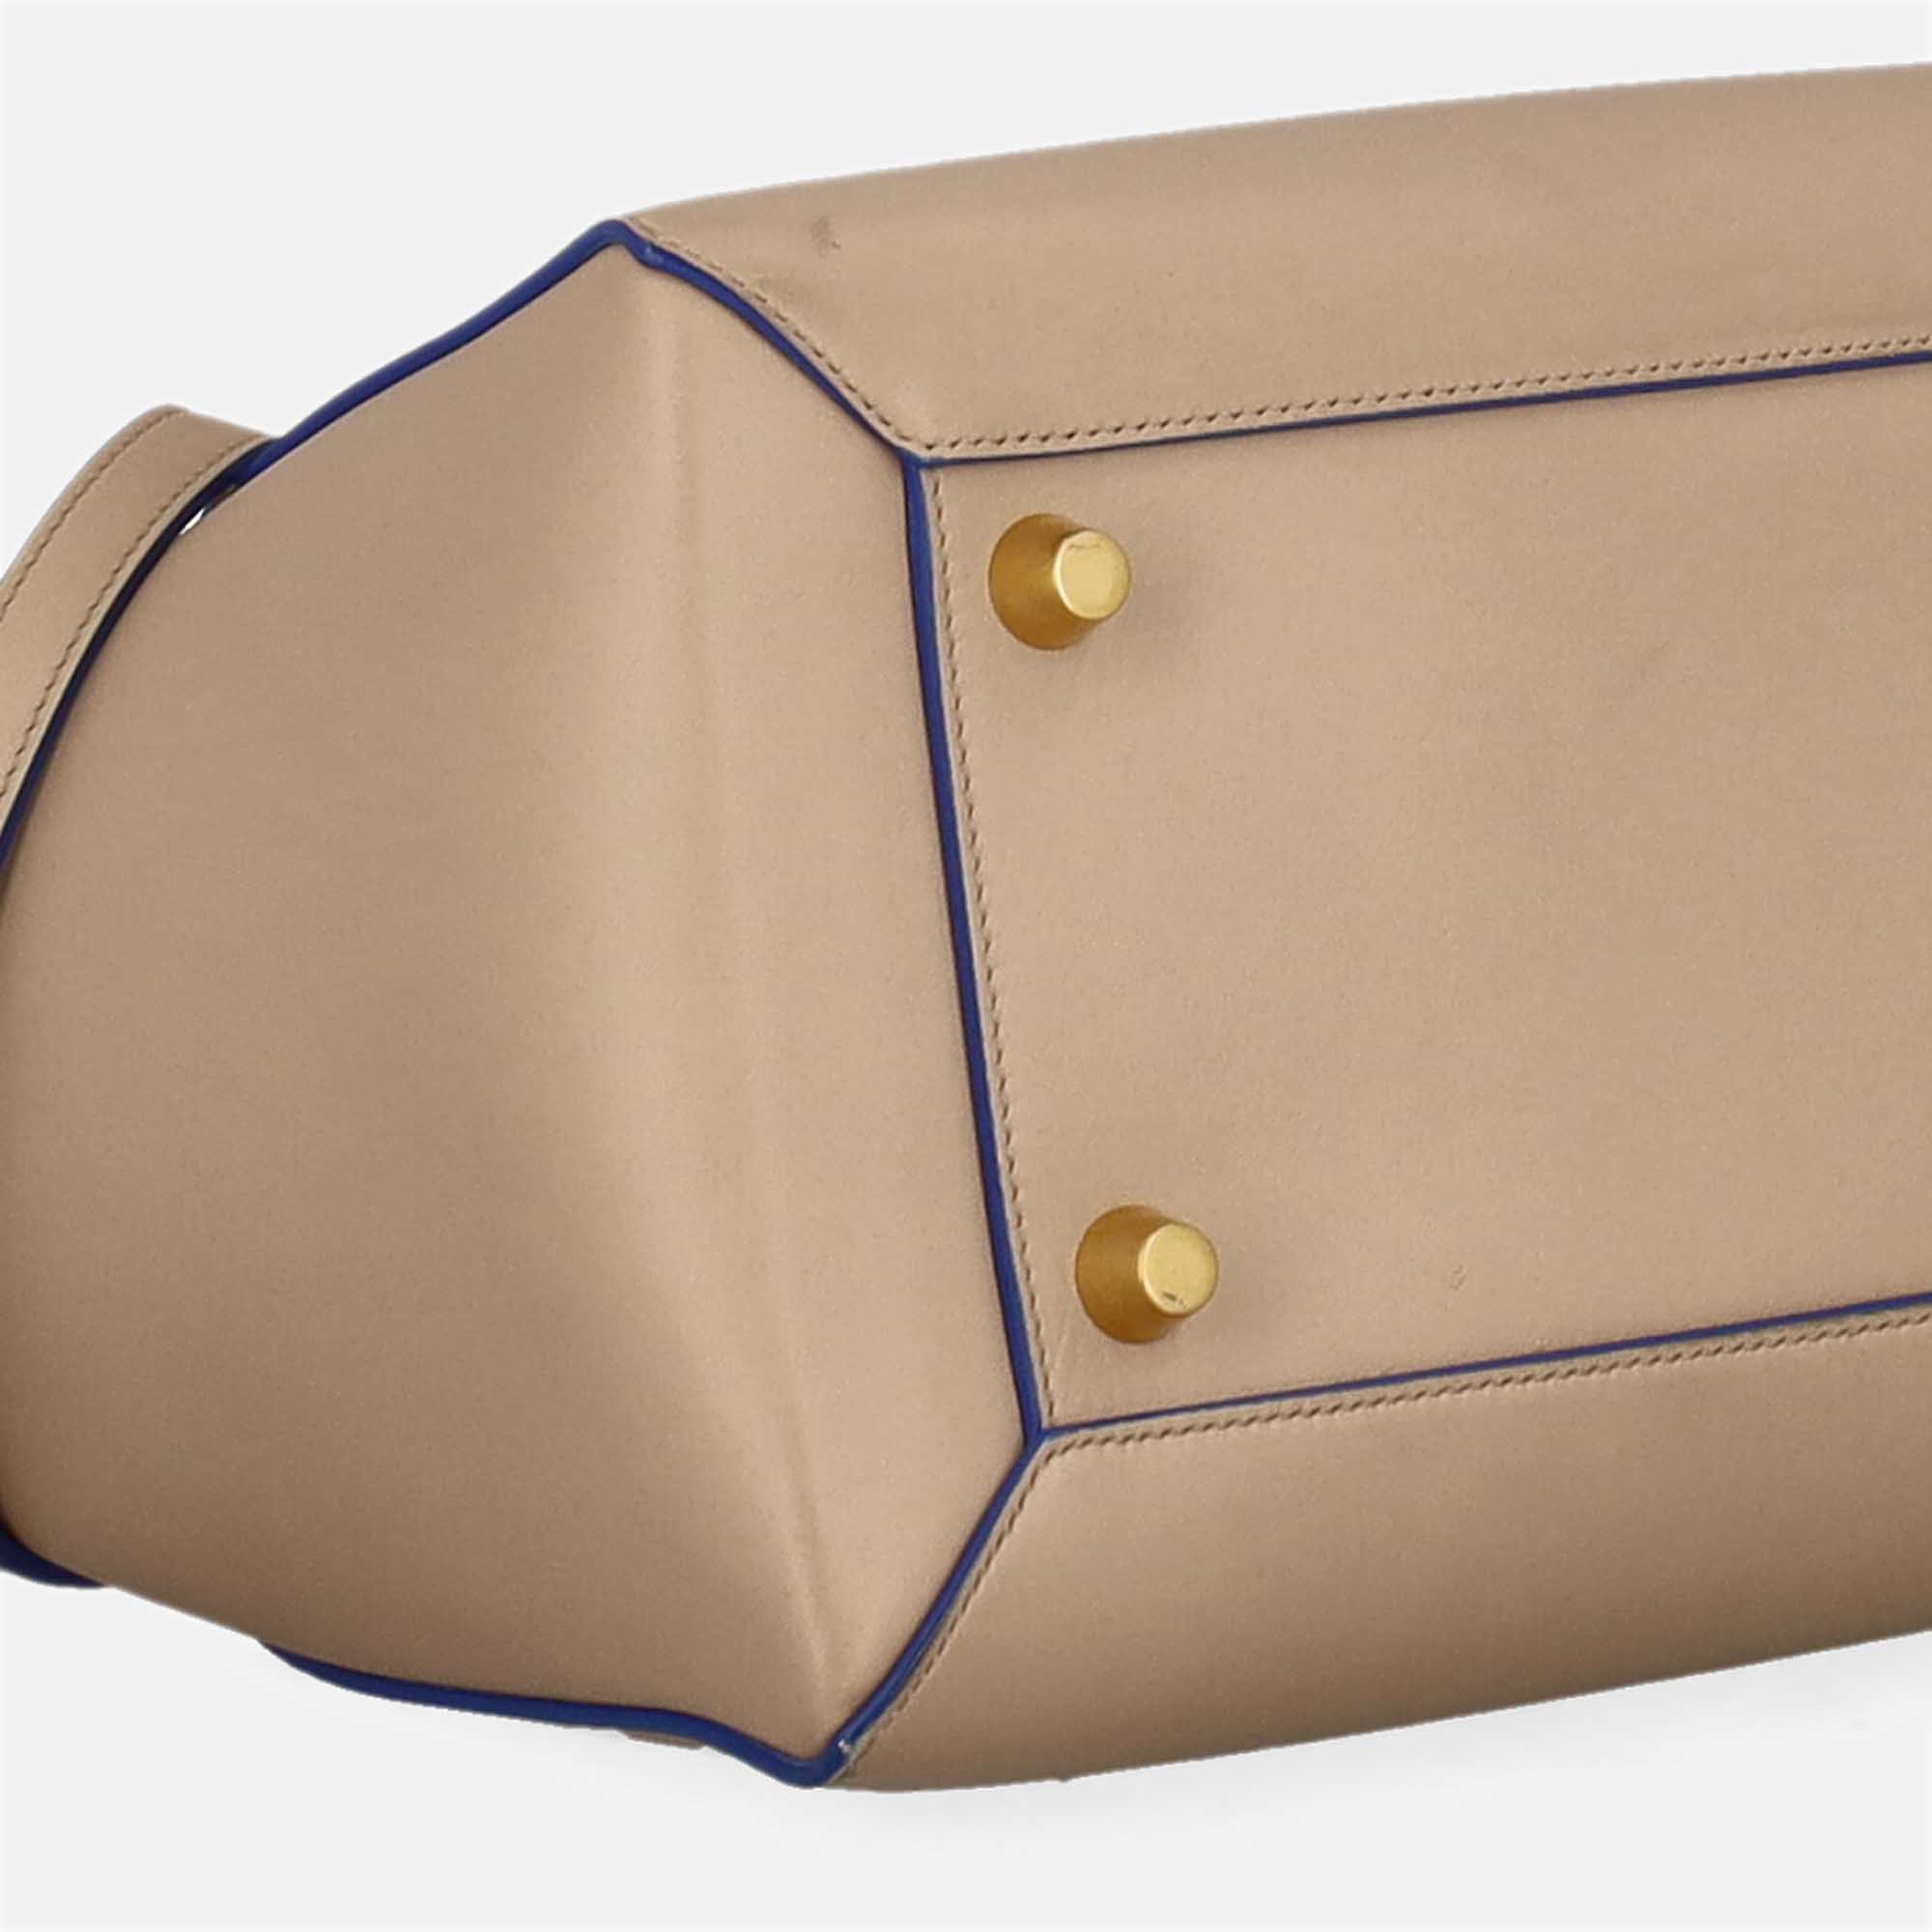 Celine  Women's Leather Tote Bag - Beige - One Size